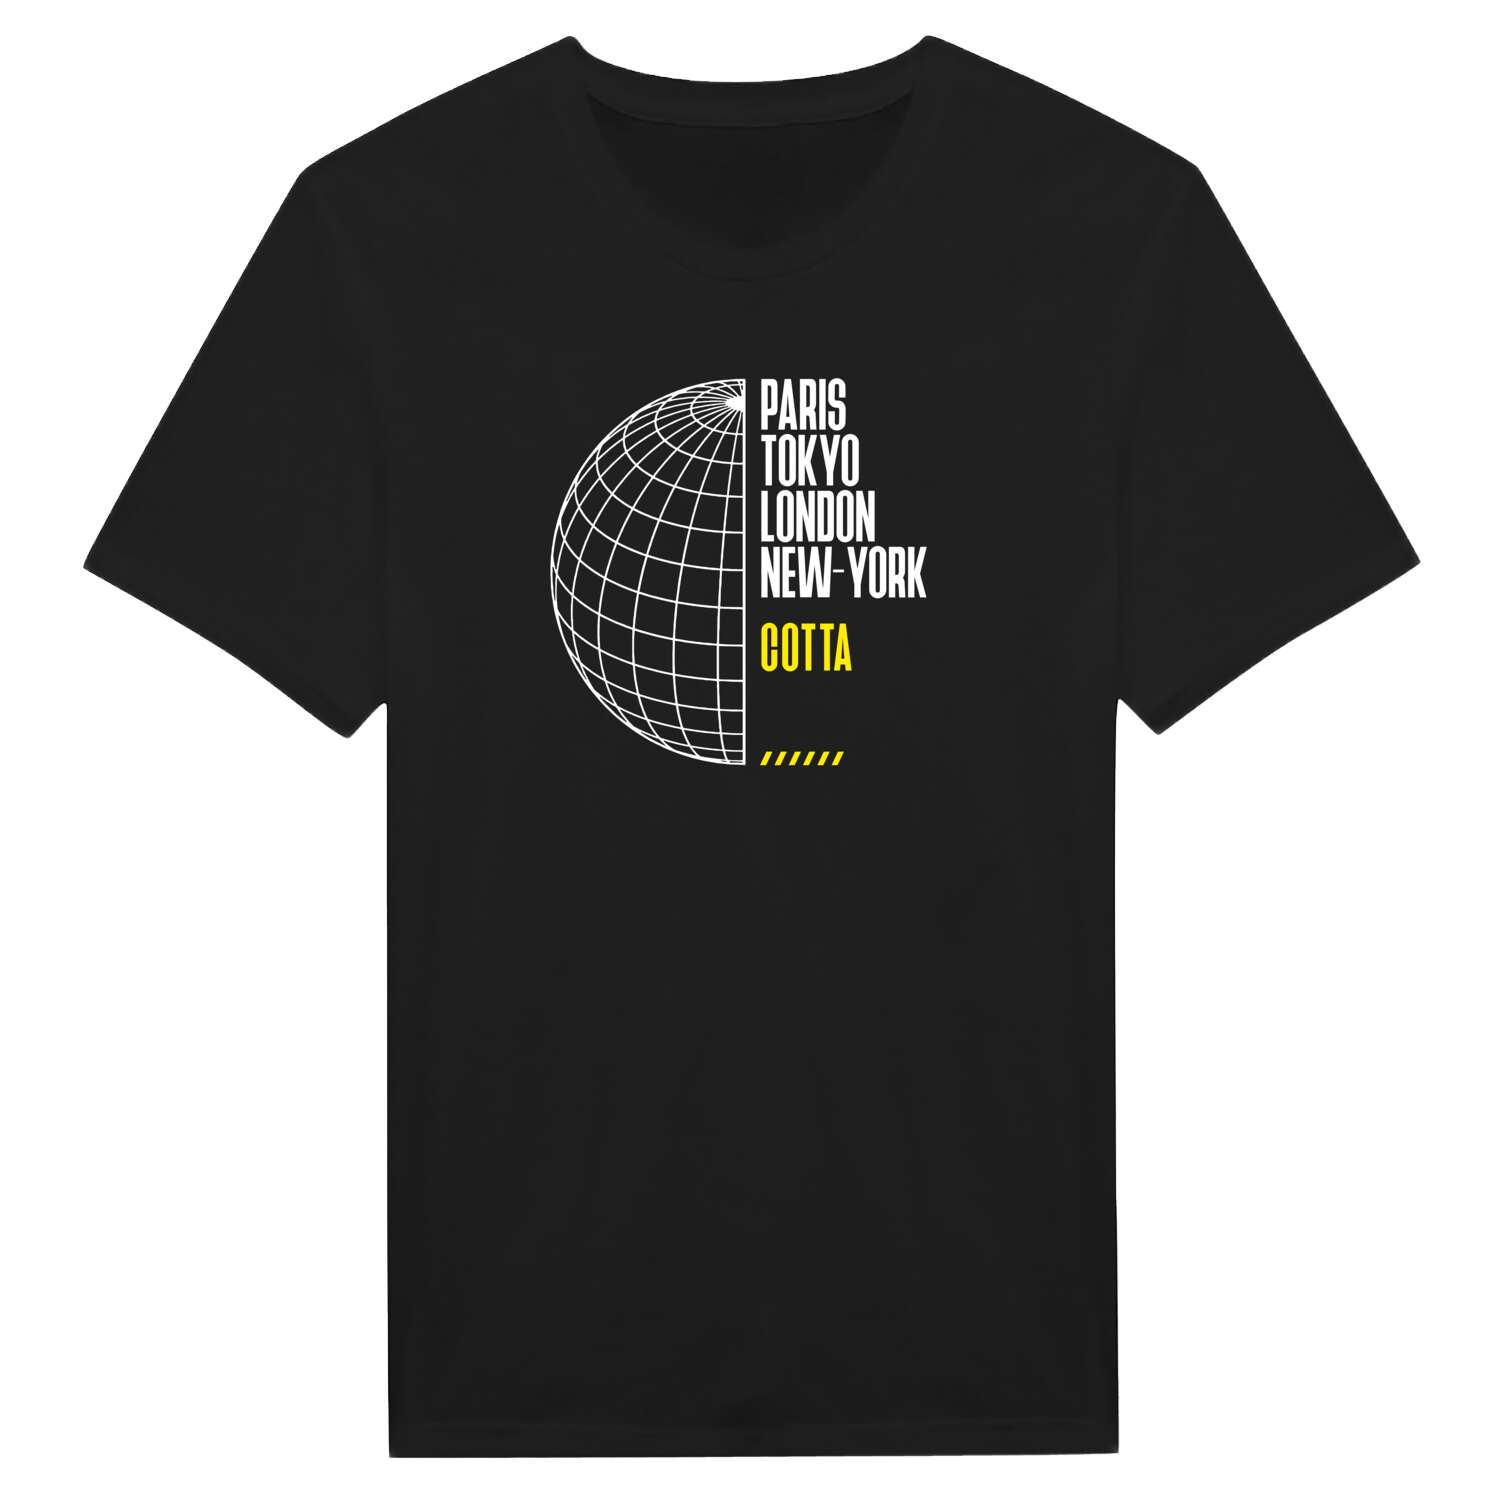 Cotta T-Shirt »Paris Tokyo London«